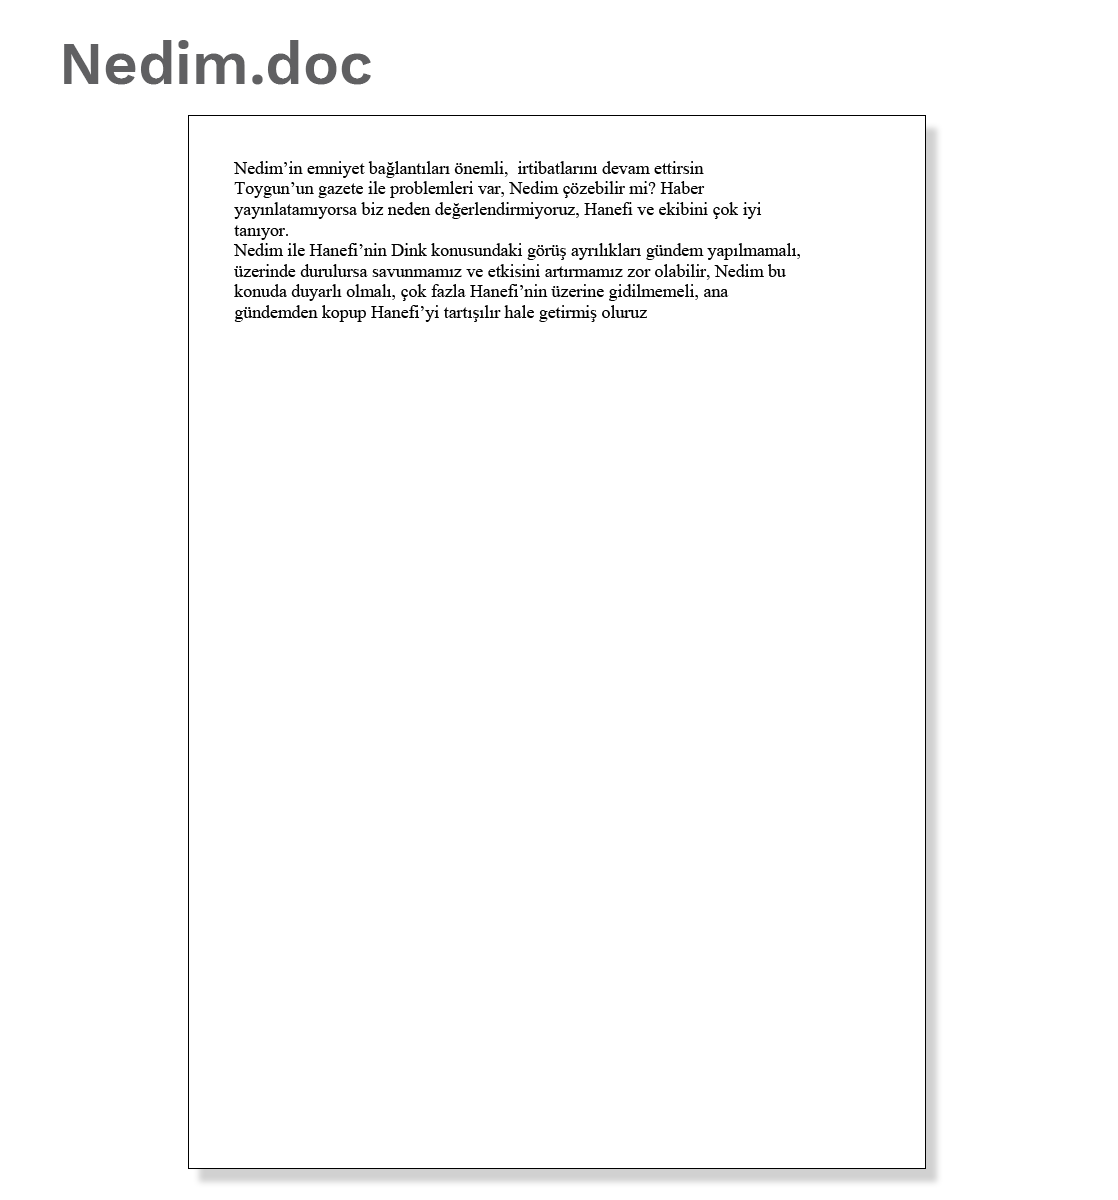 Document 4: Nedim.doc